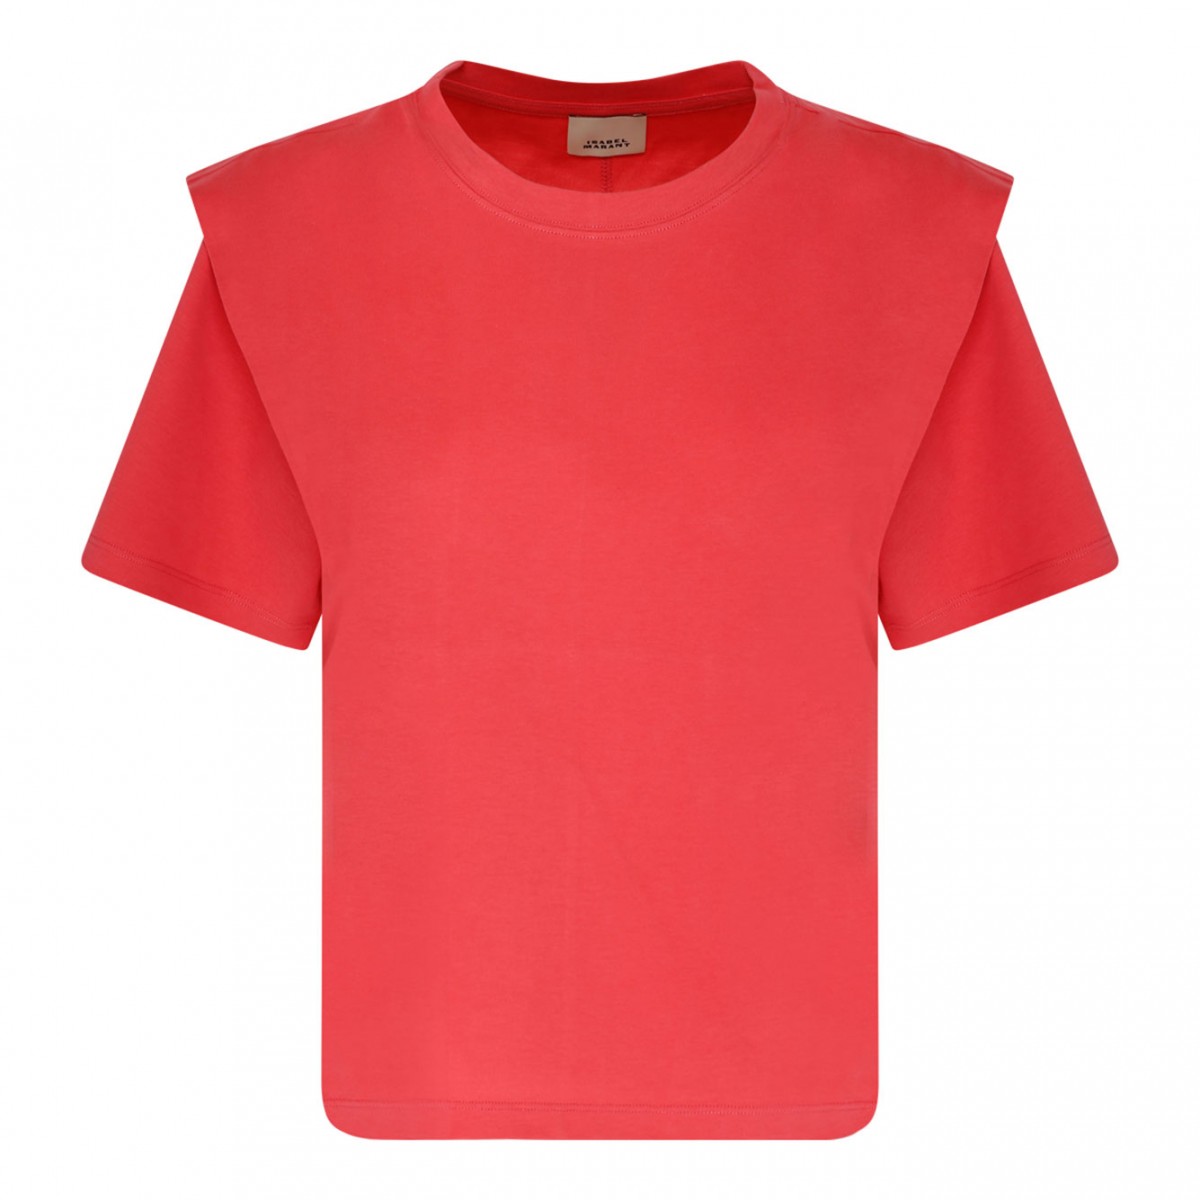 Isabel Marant Coral Cotton Zelitos T-Shirt.